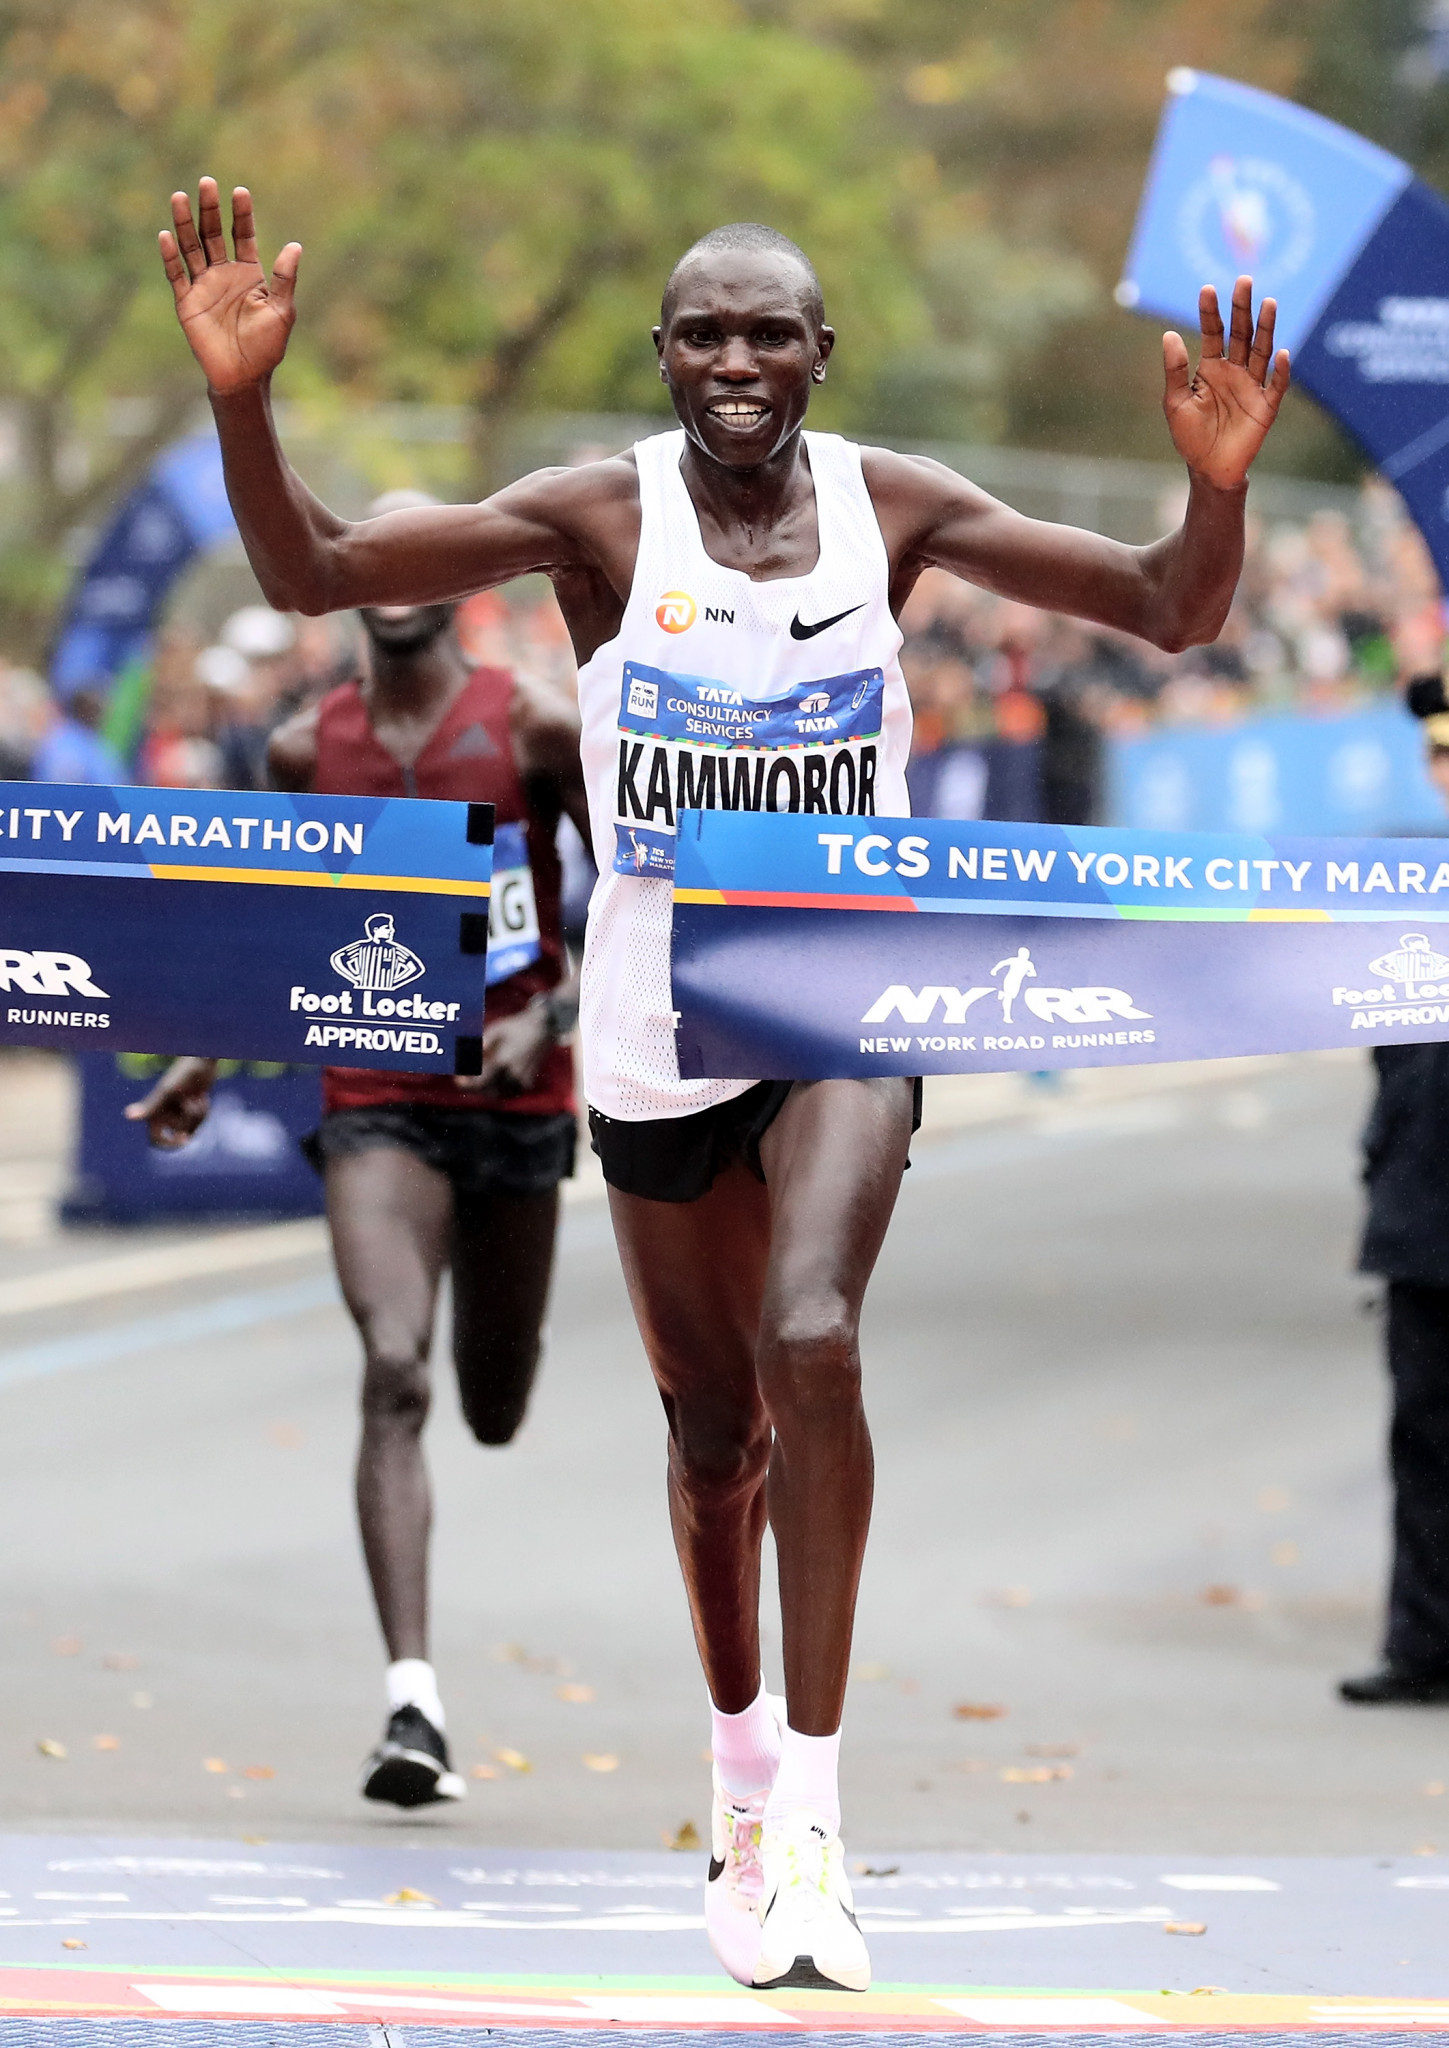 Kenyan Kamworor cruises to a maiden marathon victory in New York